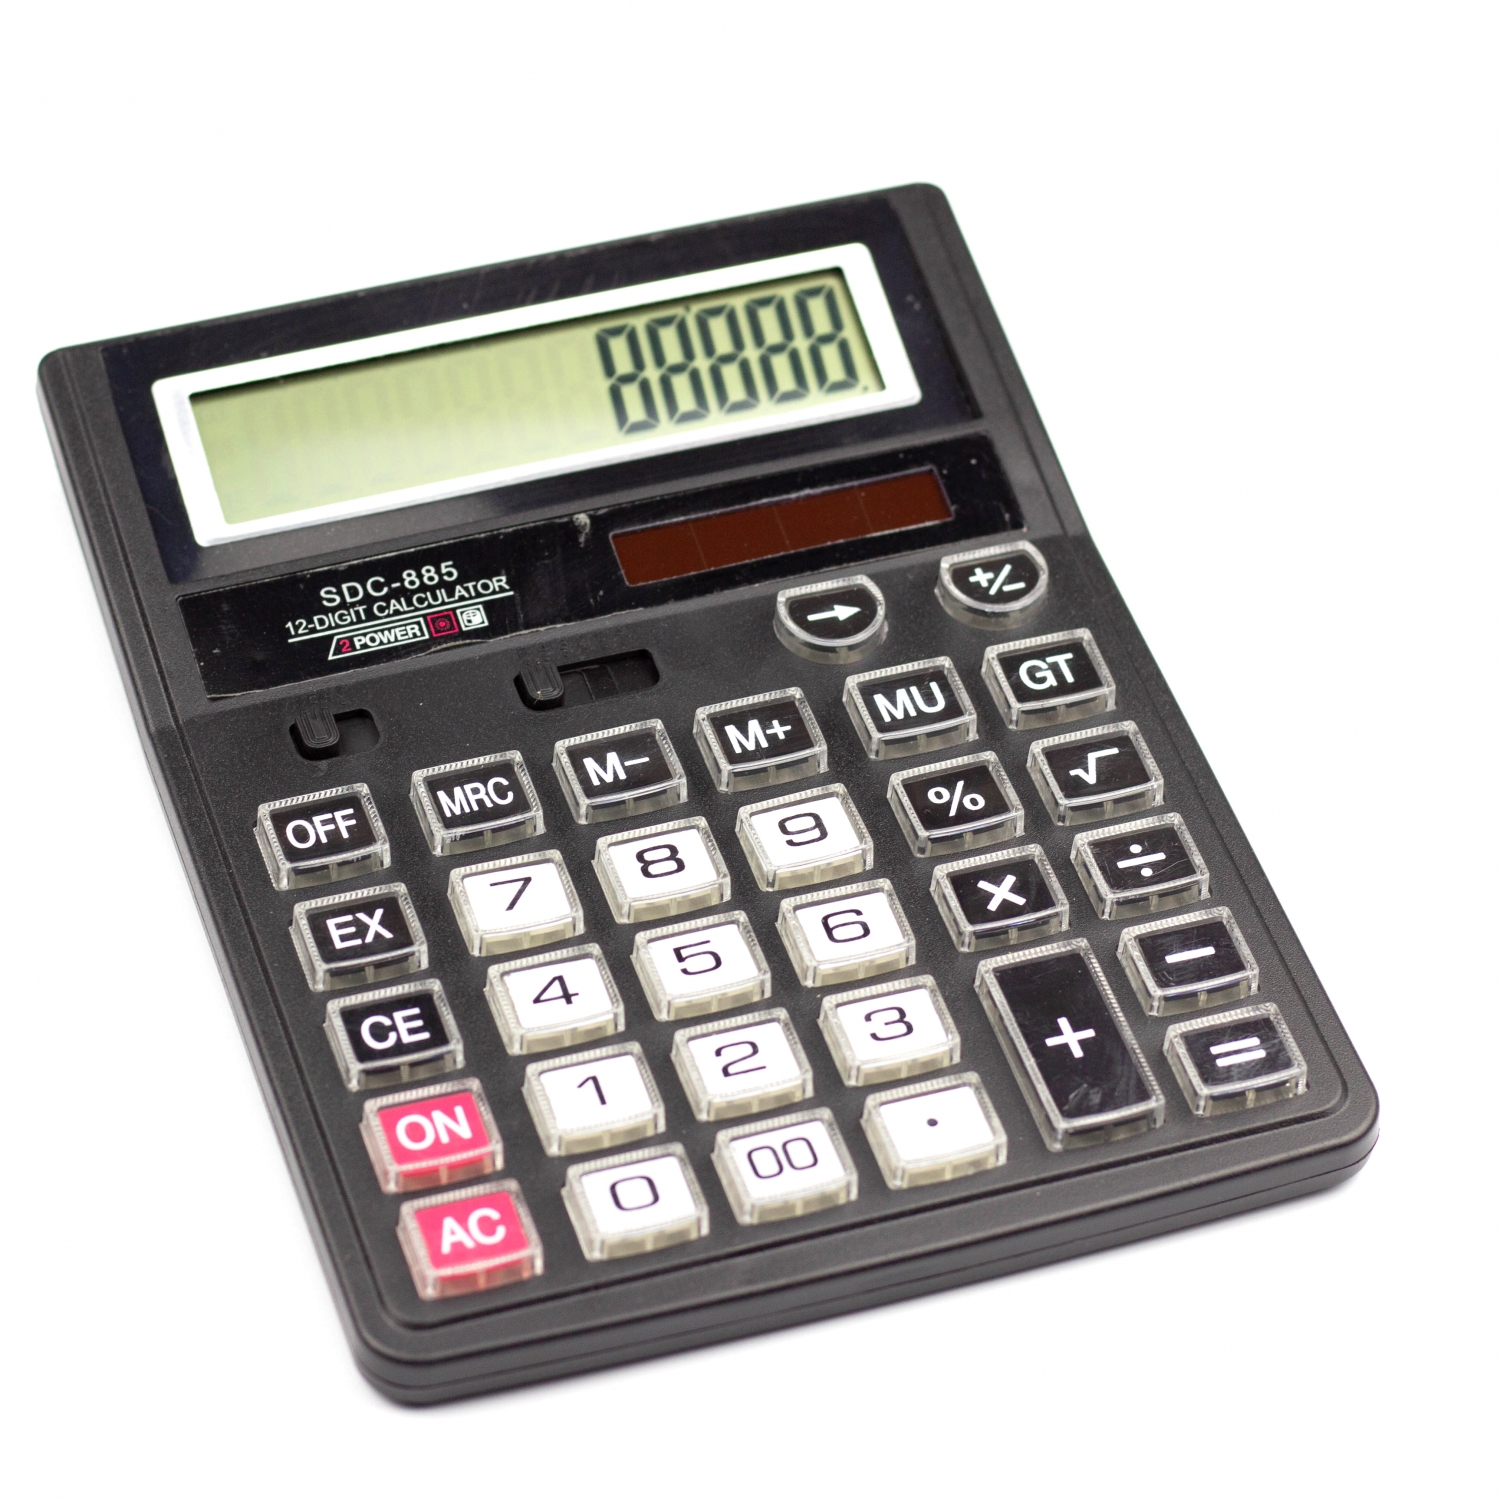 Калькулятор SDC-885 в коробке 12 разрядный AL6350 - Нижний Новгород 